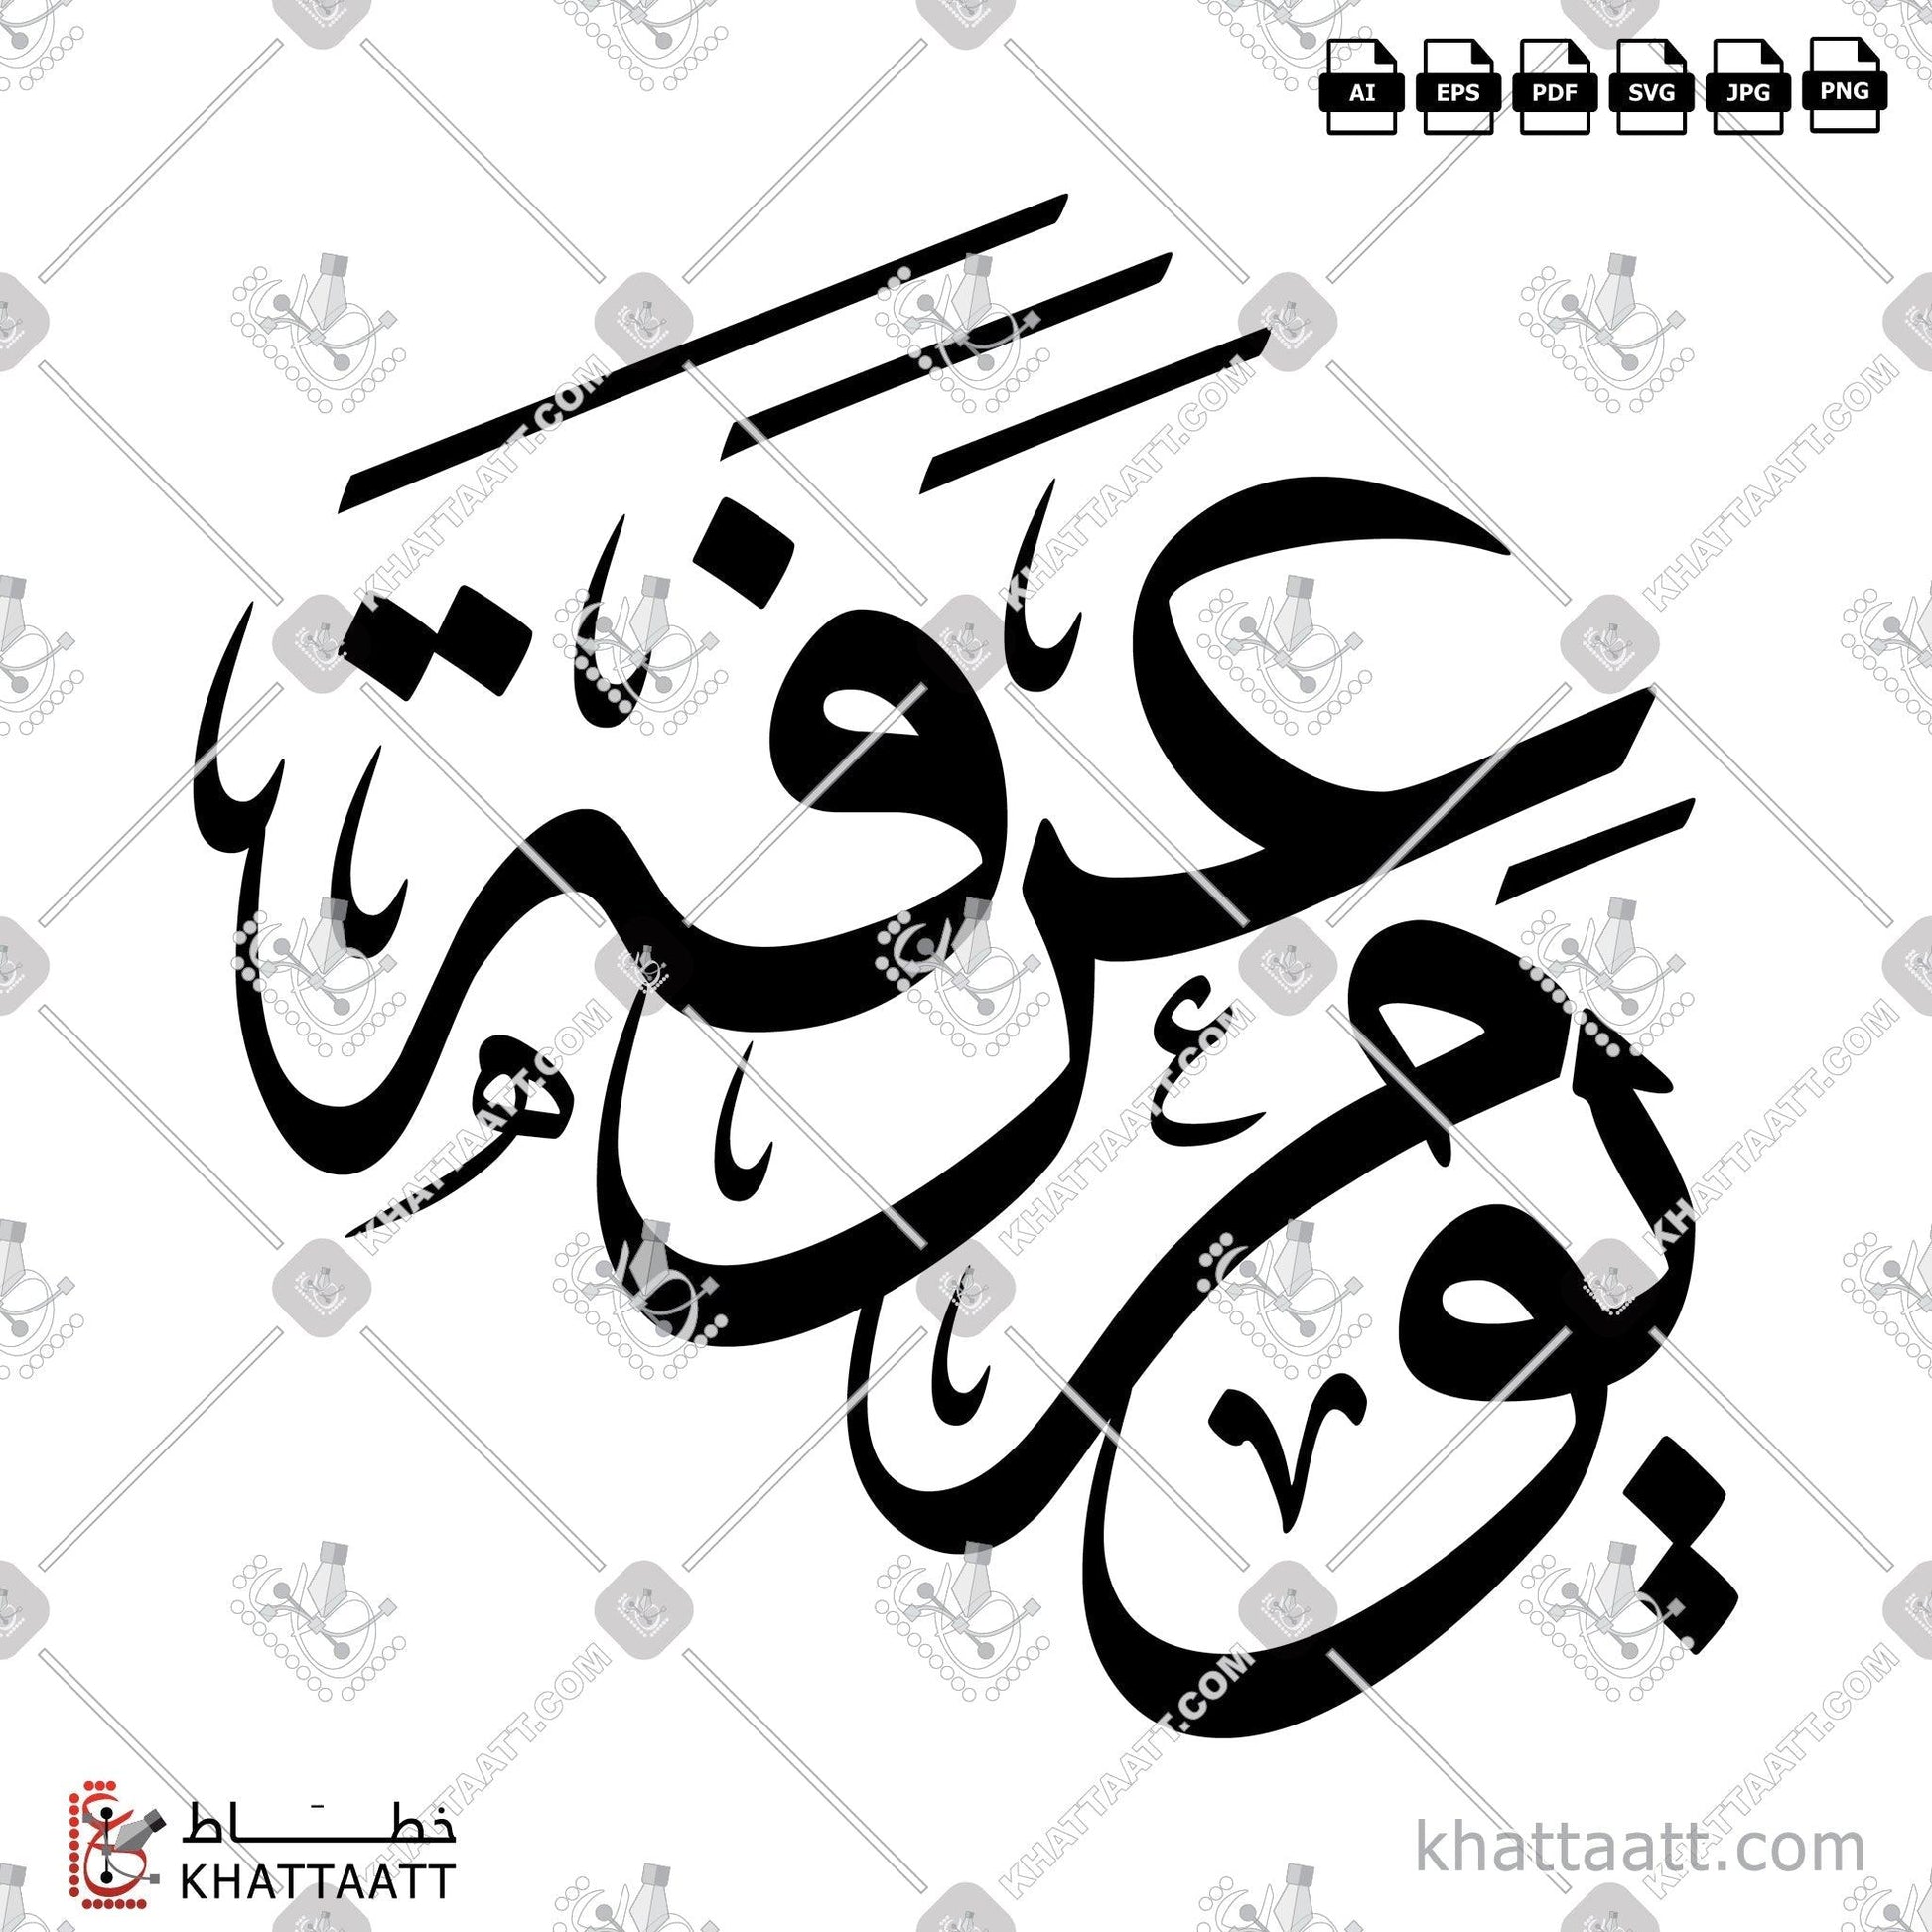 Digital Arabic calligraphy vector of Day of Arafah - يوم عرفة in Thuluth - خط الثلث